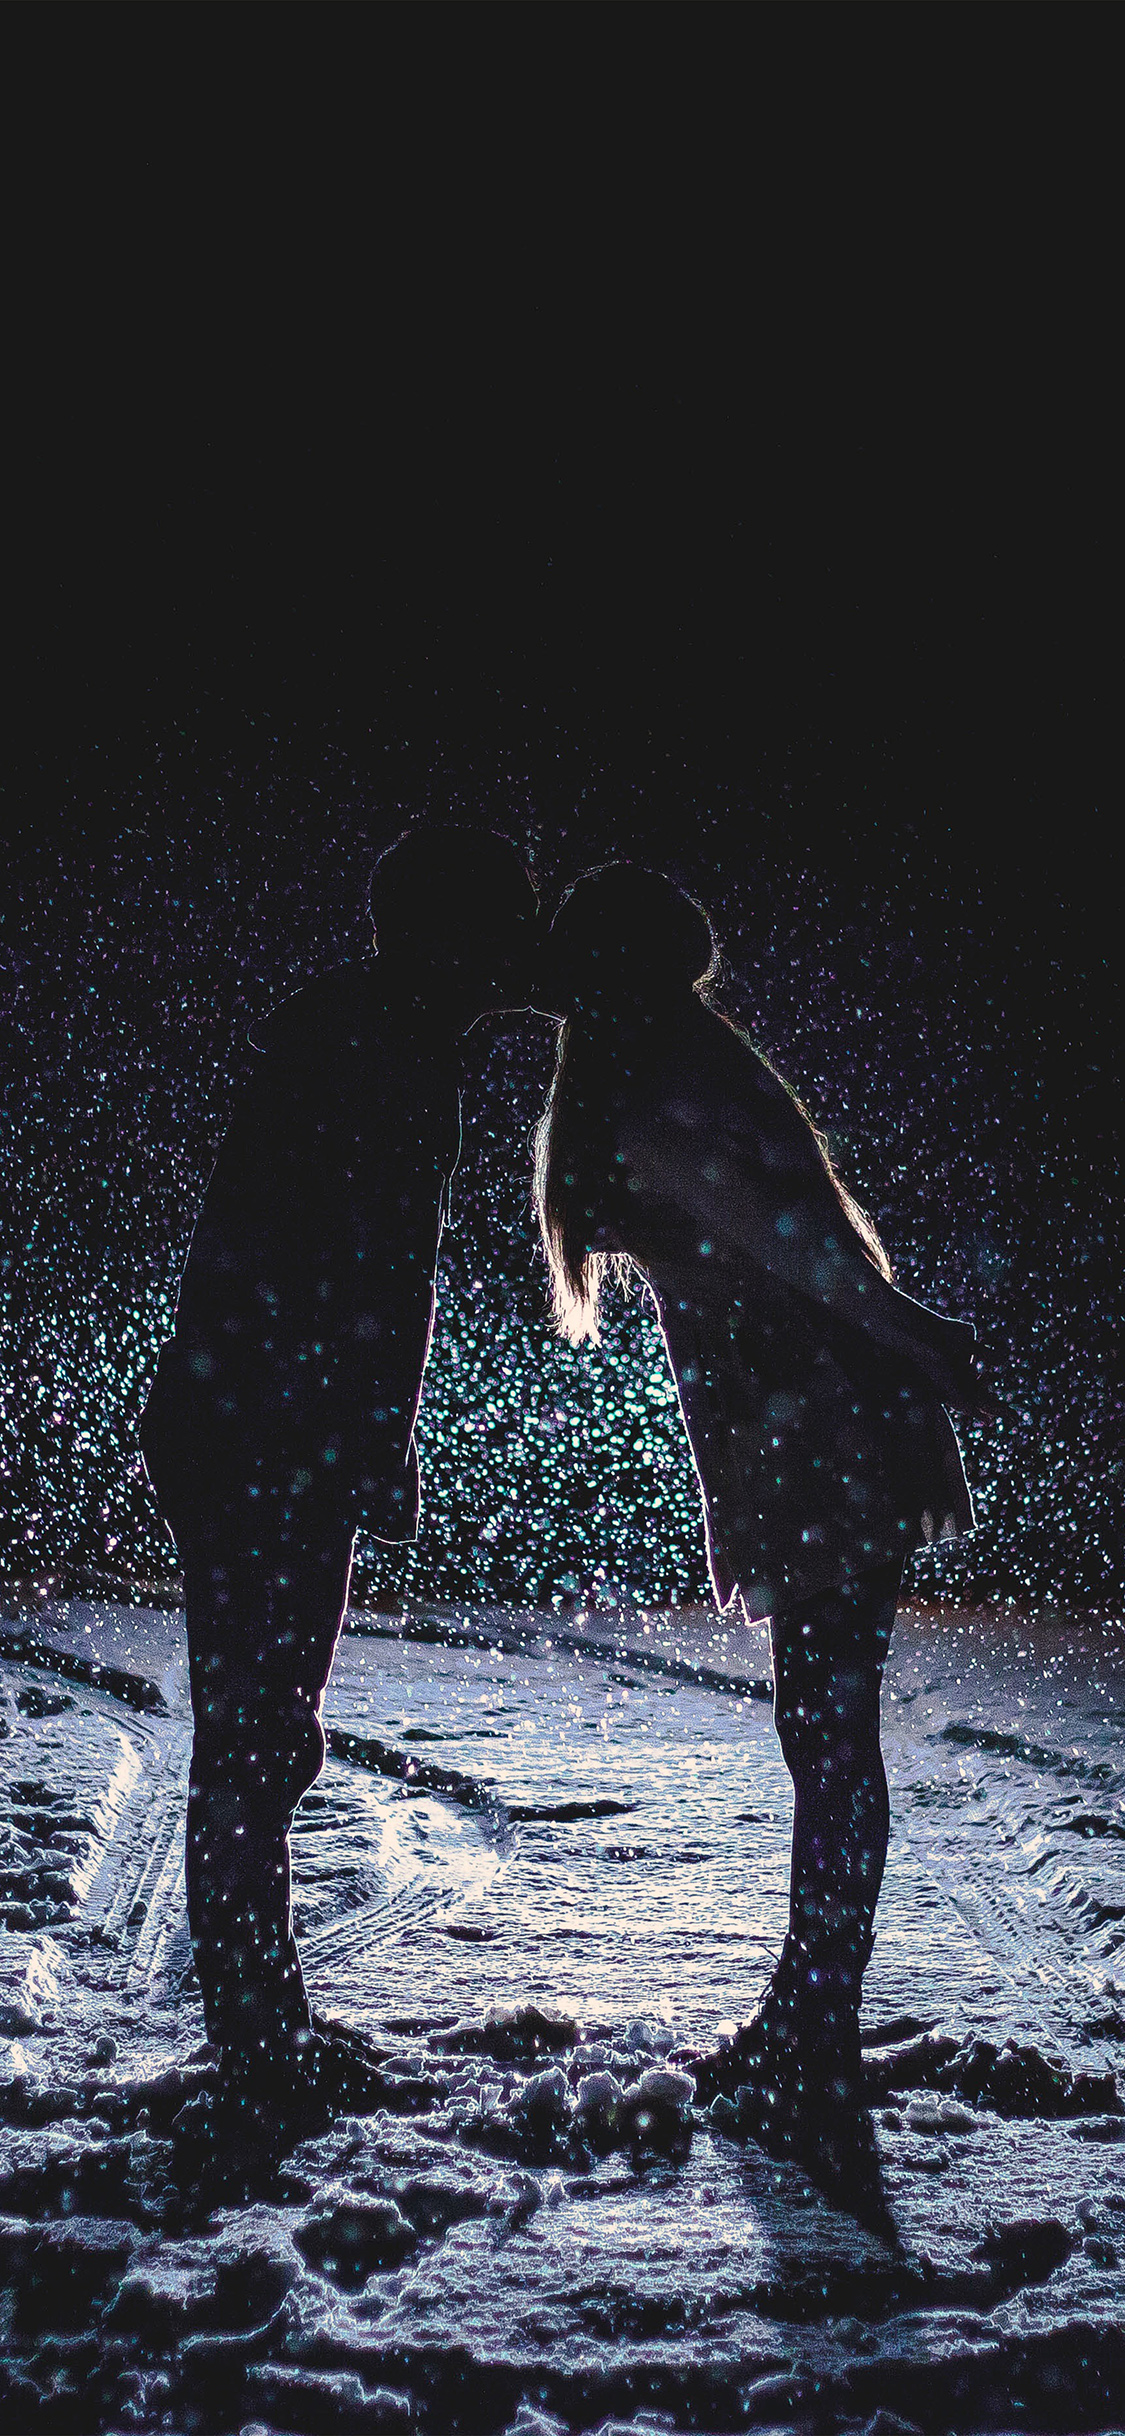 iPhone X wallpaper. kiss love dark couple romantic winter